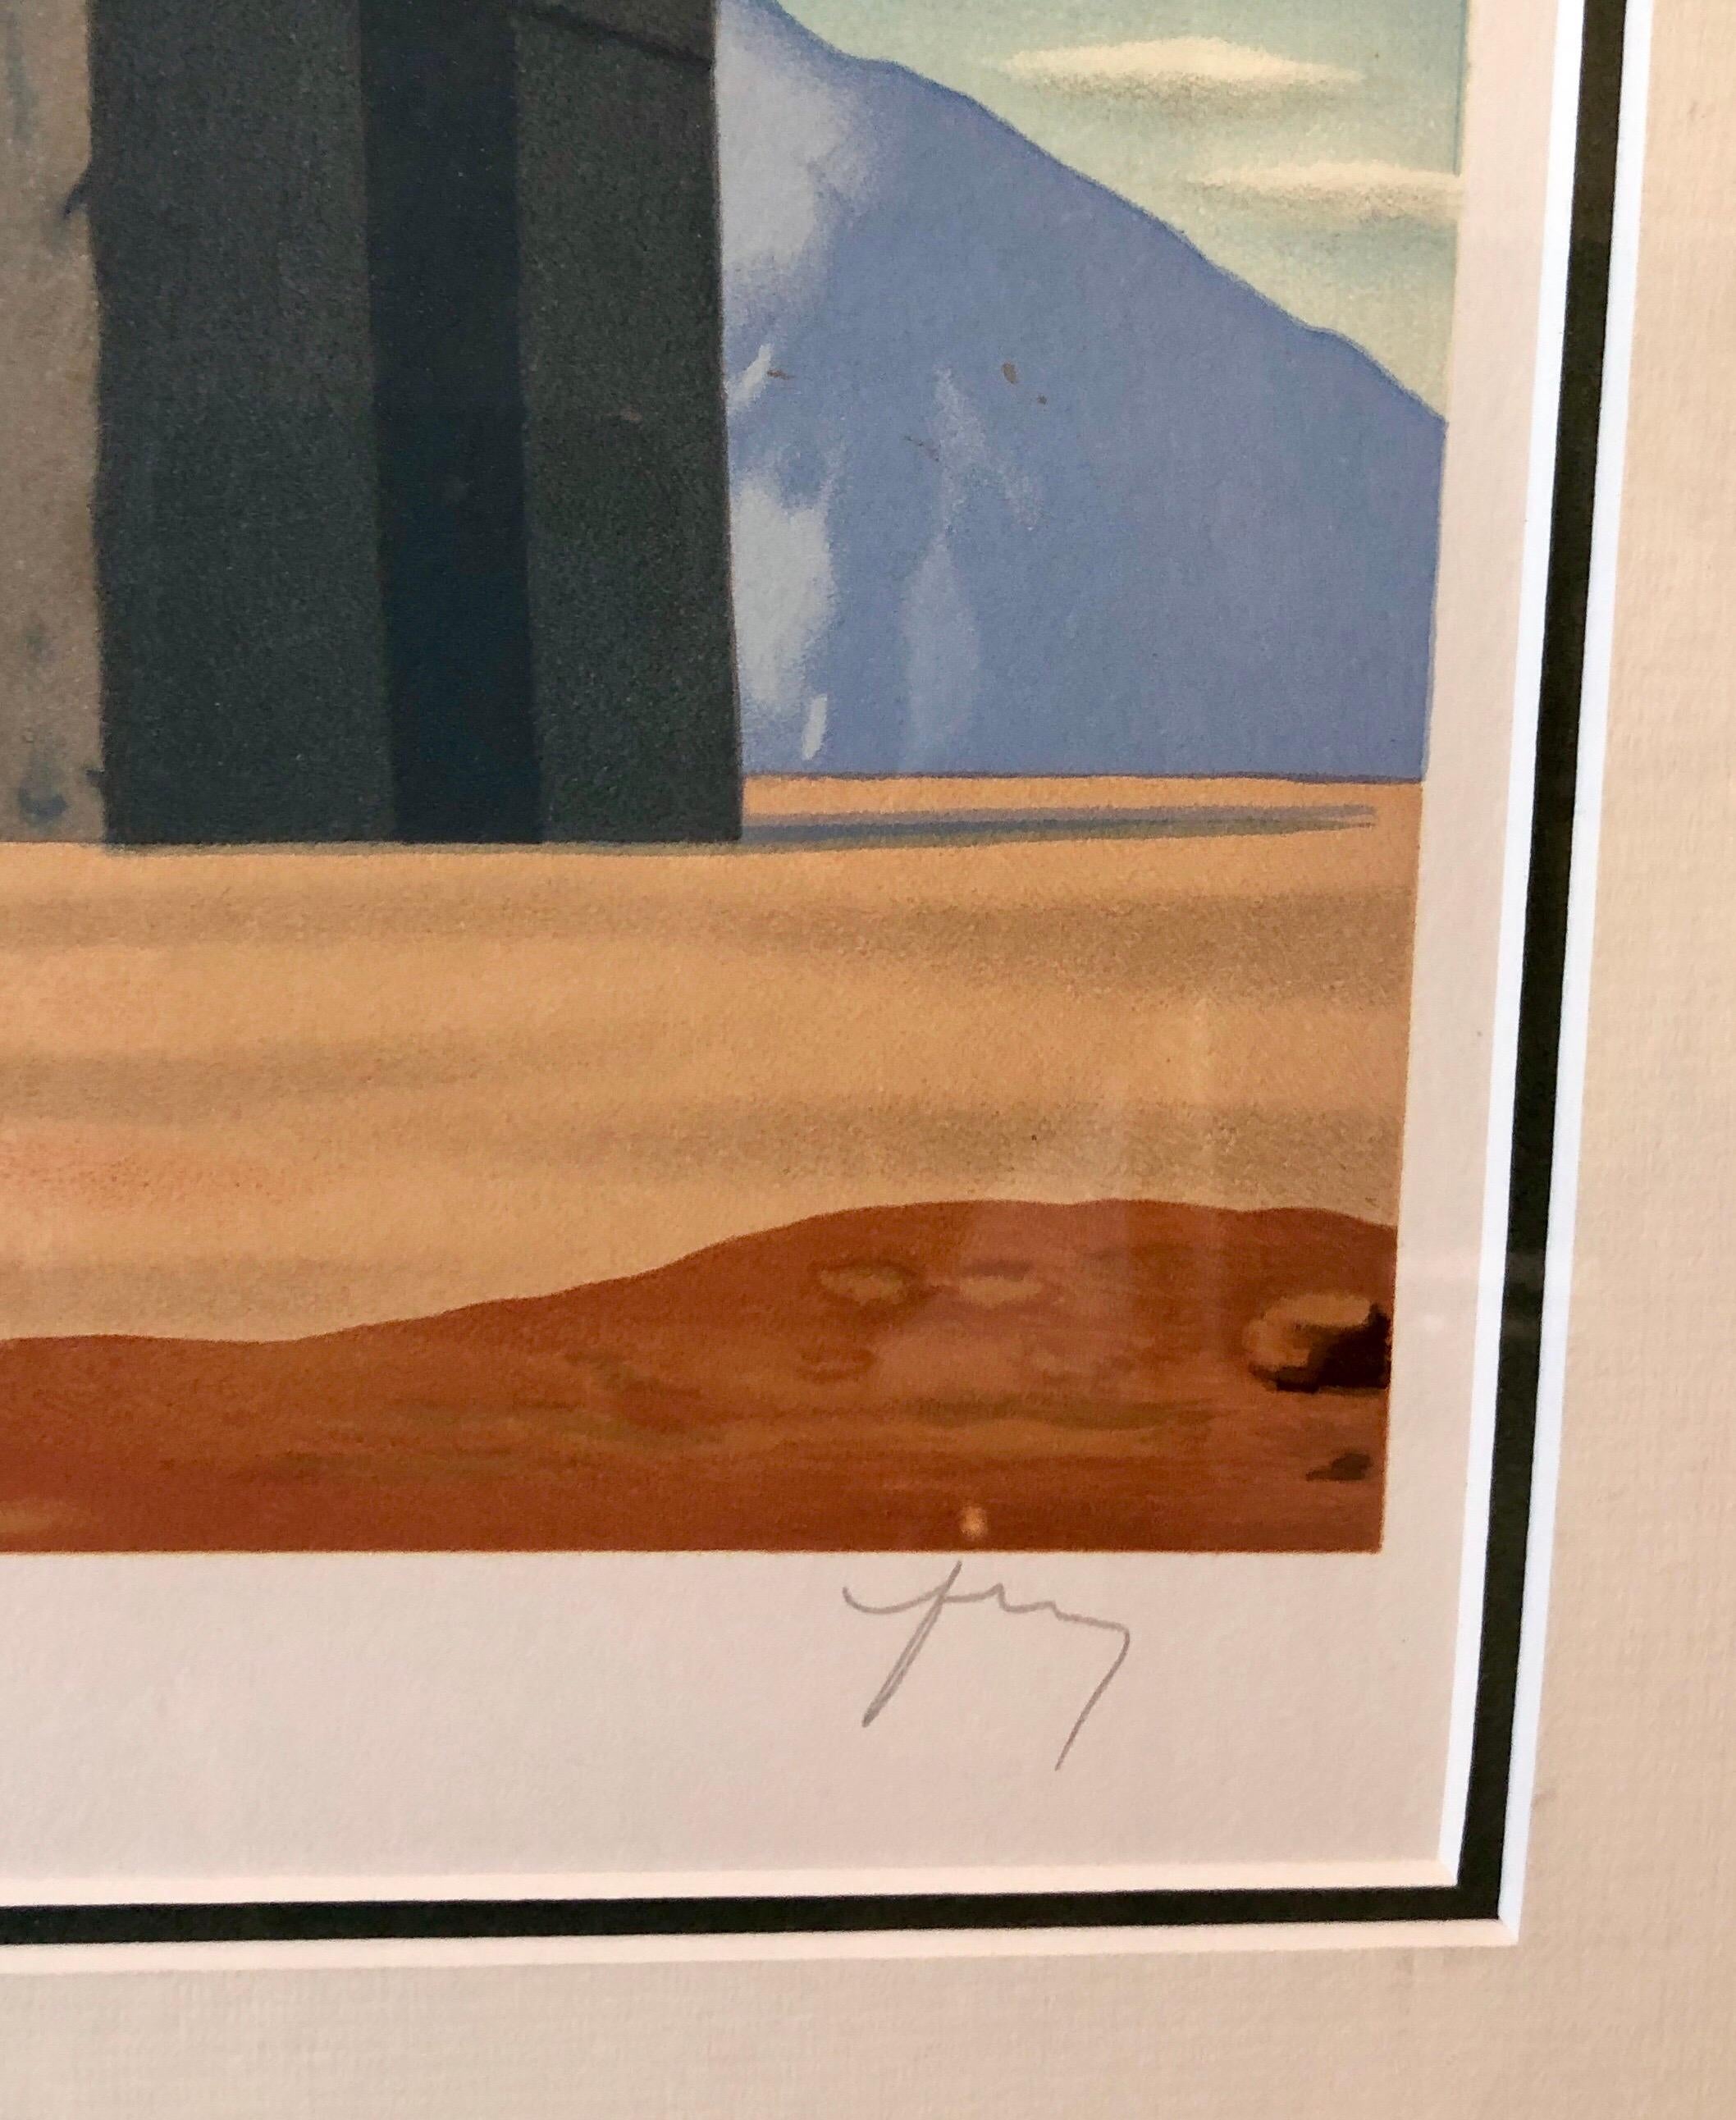 Surrealist Dream Lithograph Belgian Master Magritte Pencil Signed by Mourlot - Brown Landscape Print by (after) René Magritte